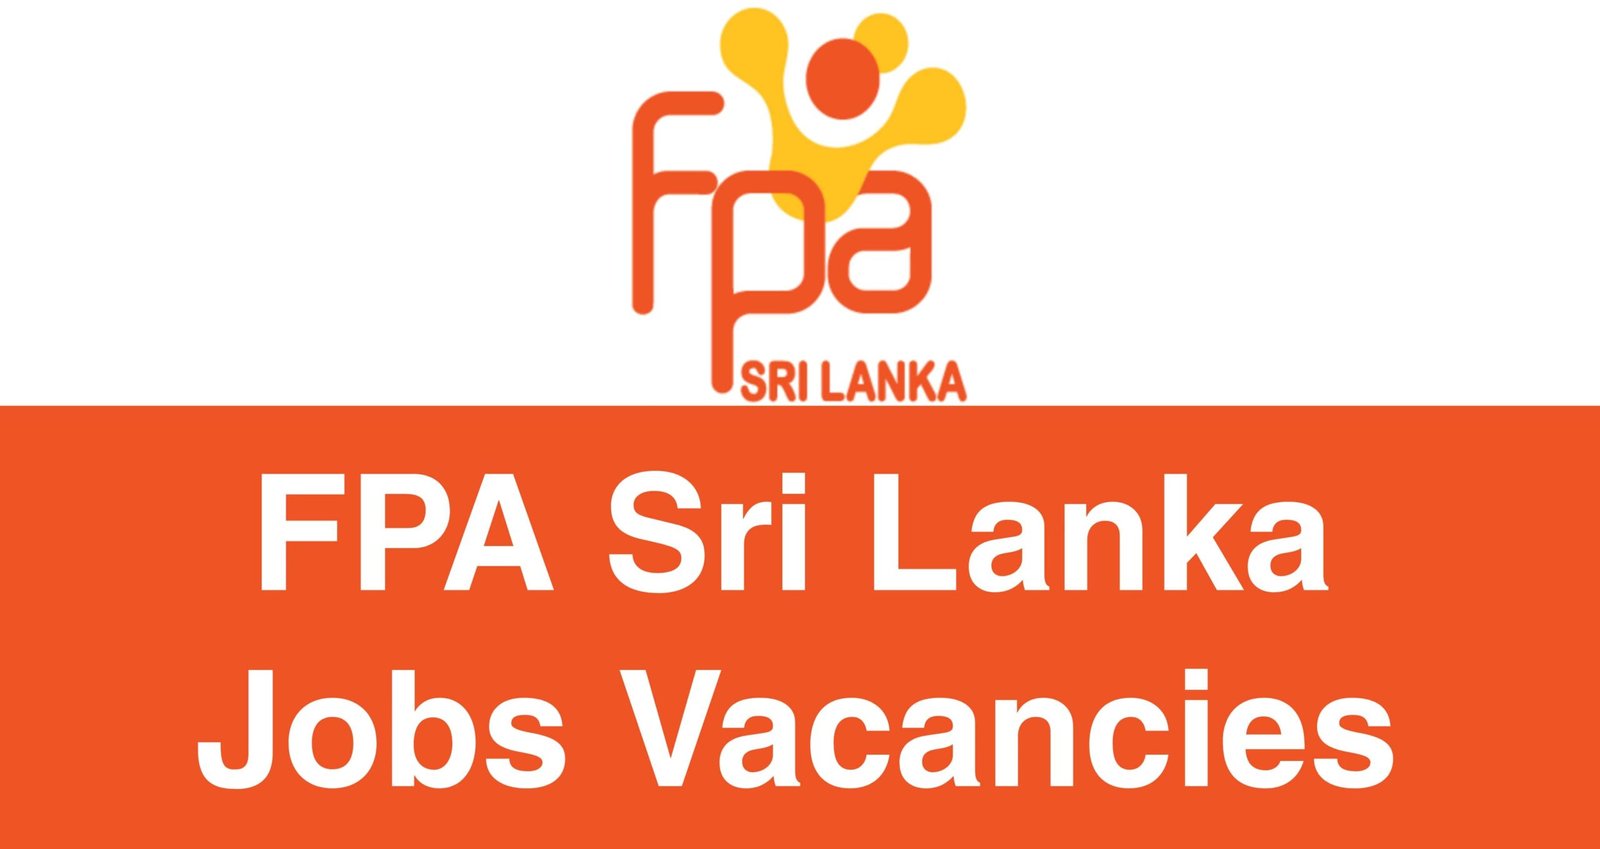 Family Planning Association of Sri Lanka Jobs Vacancies